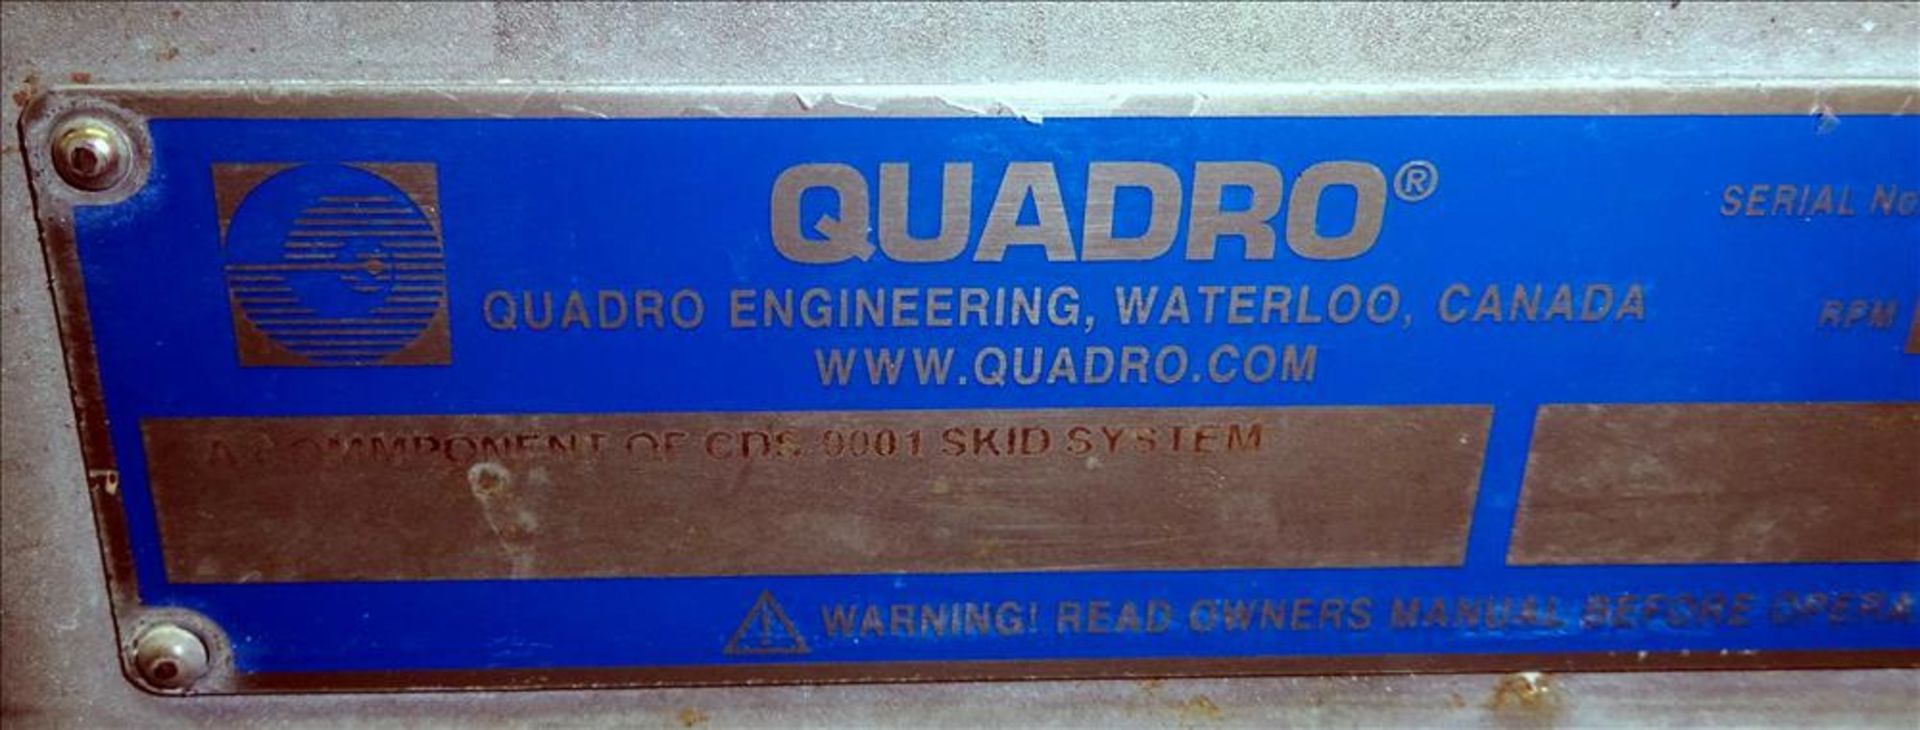 Quadro Continuous Disperser System - Image 14 of 70